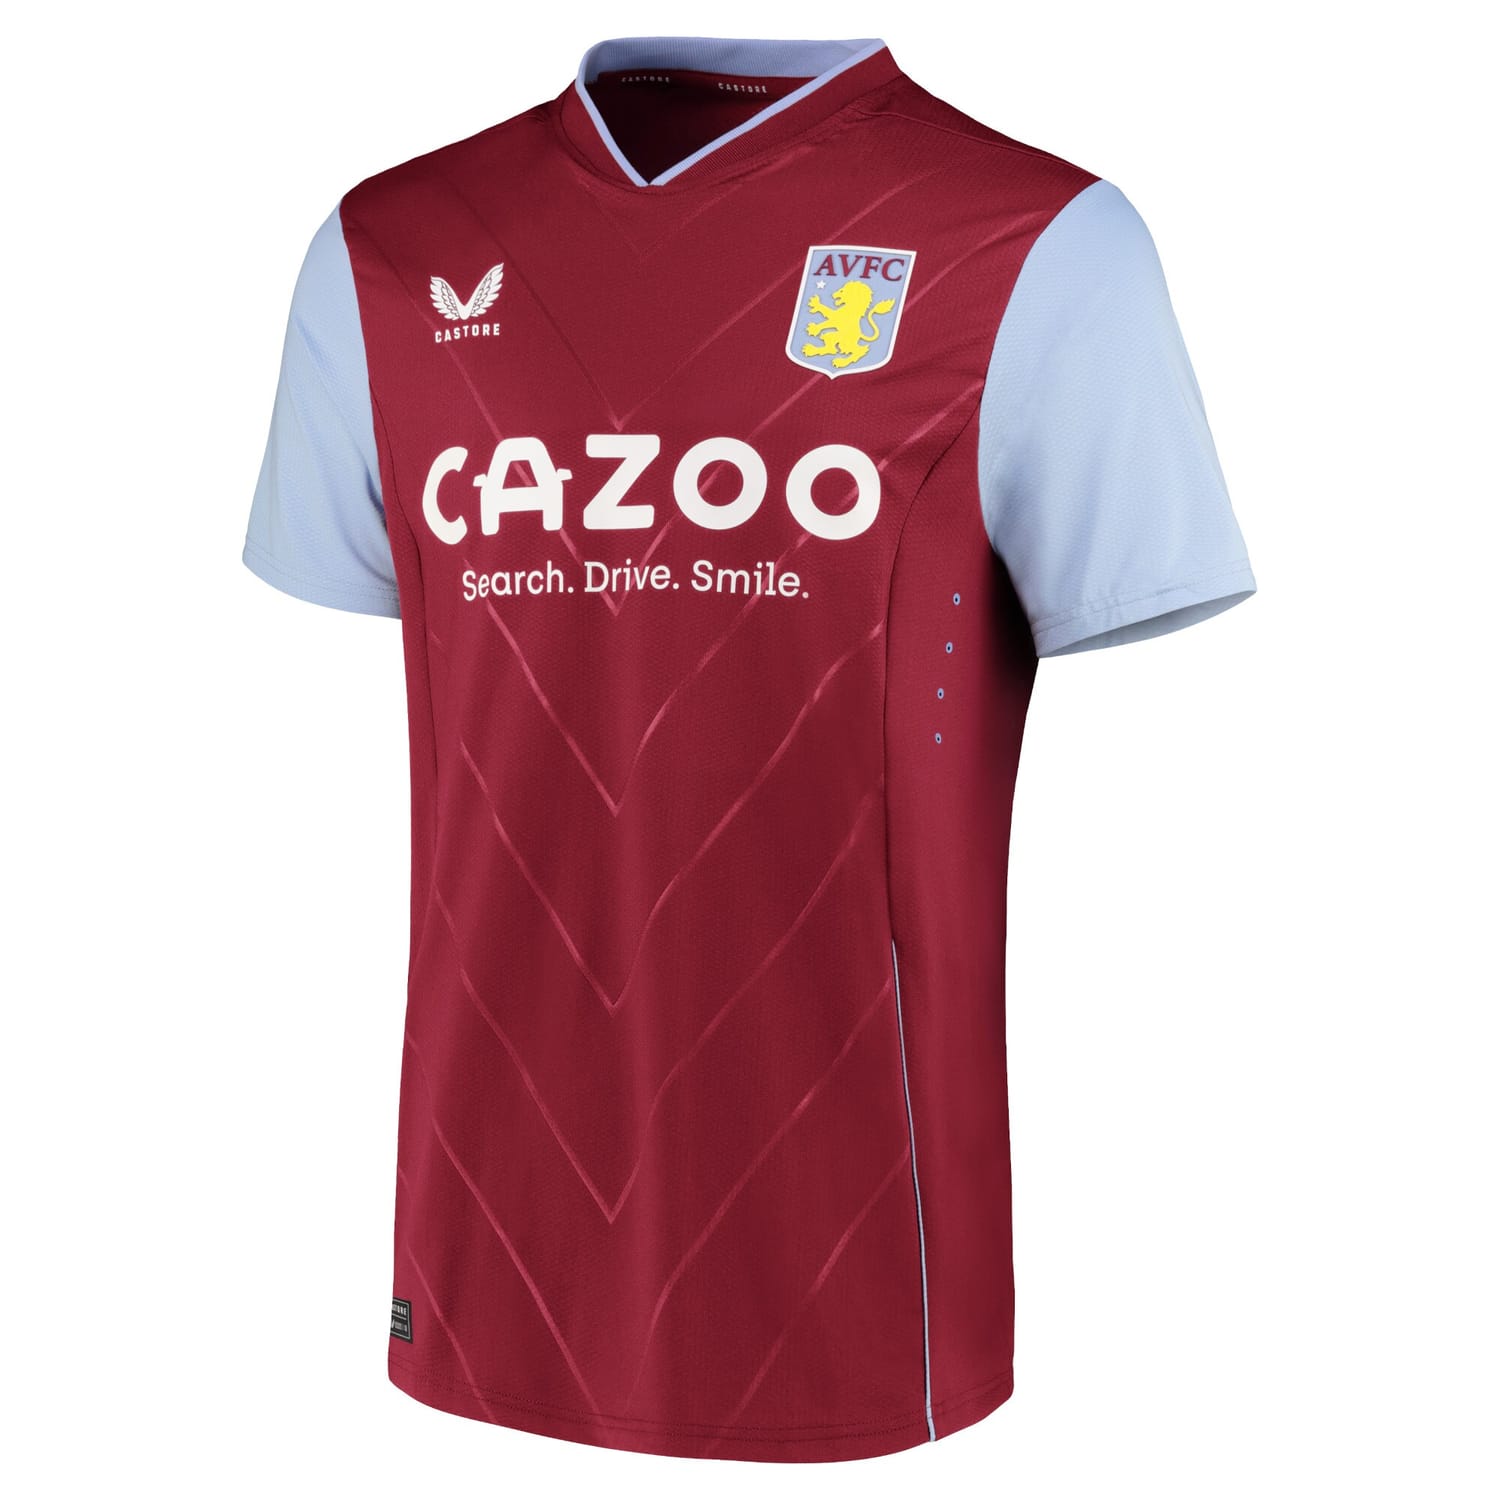 Premier League Aston Villa Home Cup Pro Jersey Shirt 2022-23 player Emily Gielnik 9 printing for Men